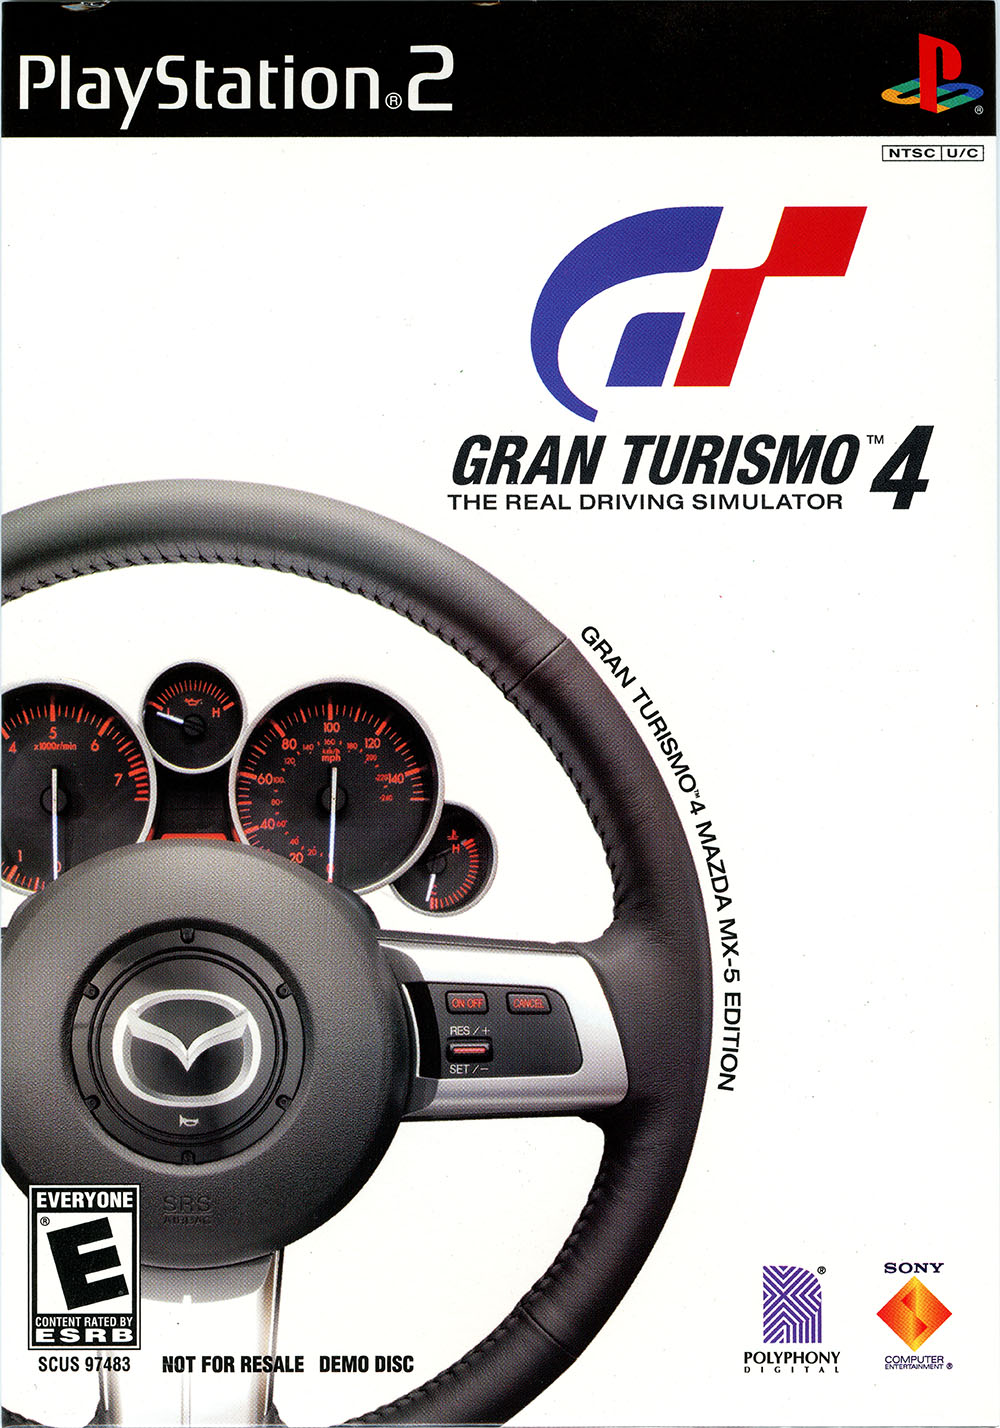 Video Game Preservation Collective: Gran Turismo demos